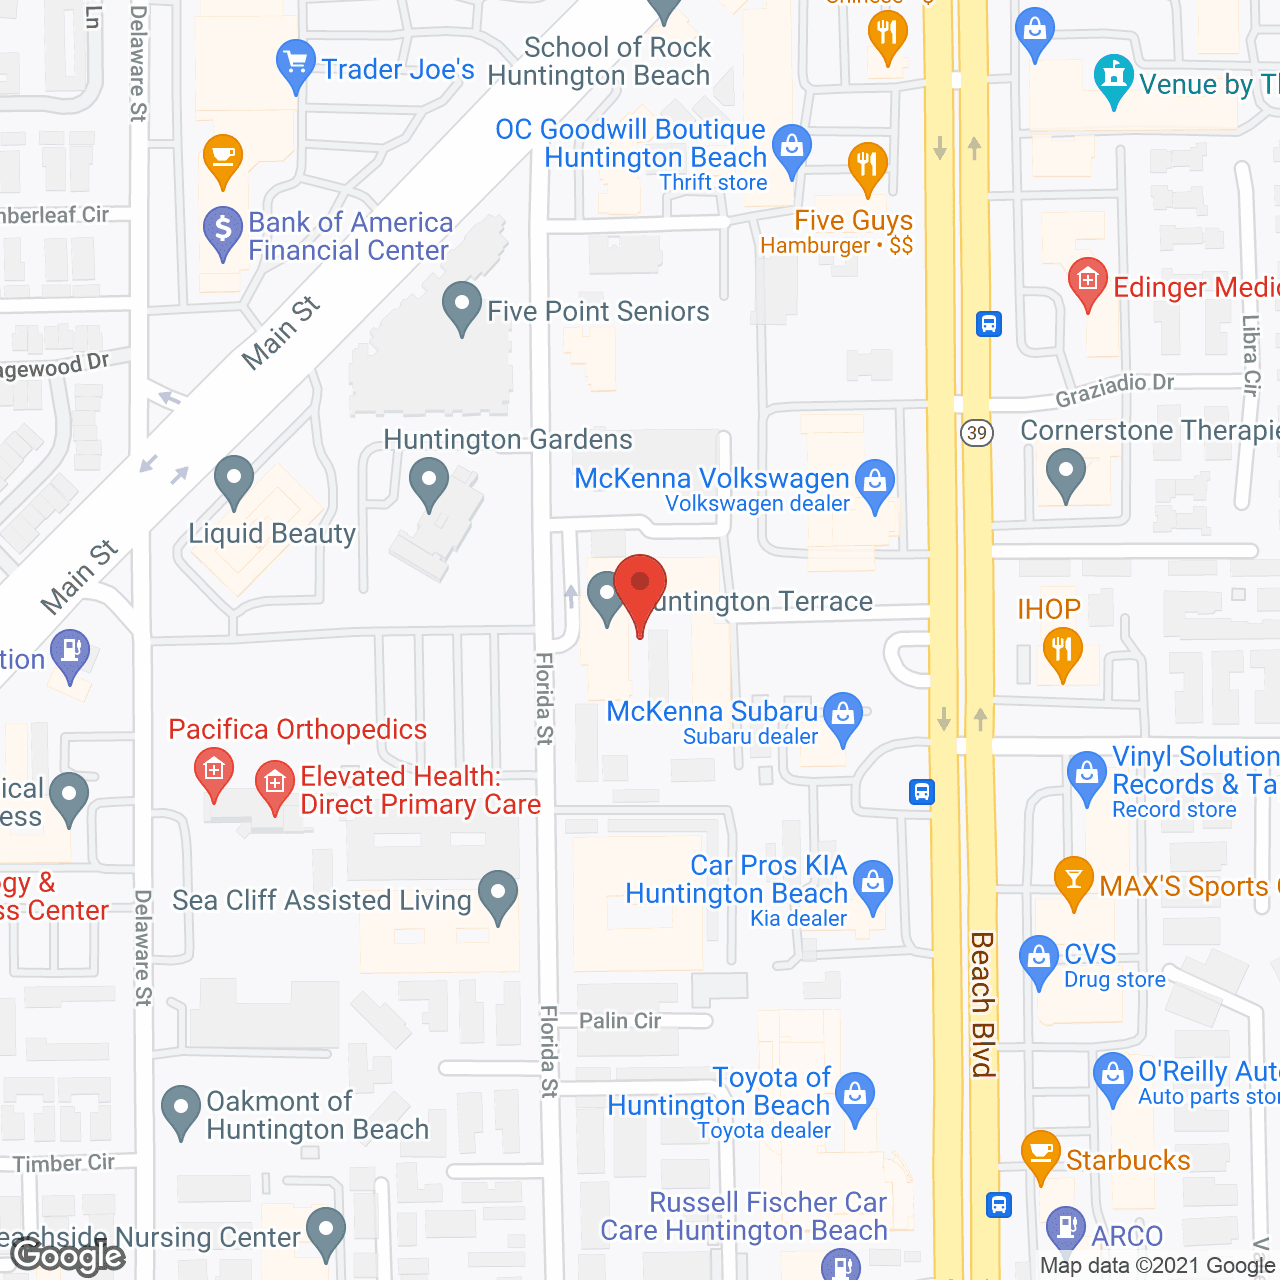 Huntington Terrace in google map